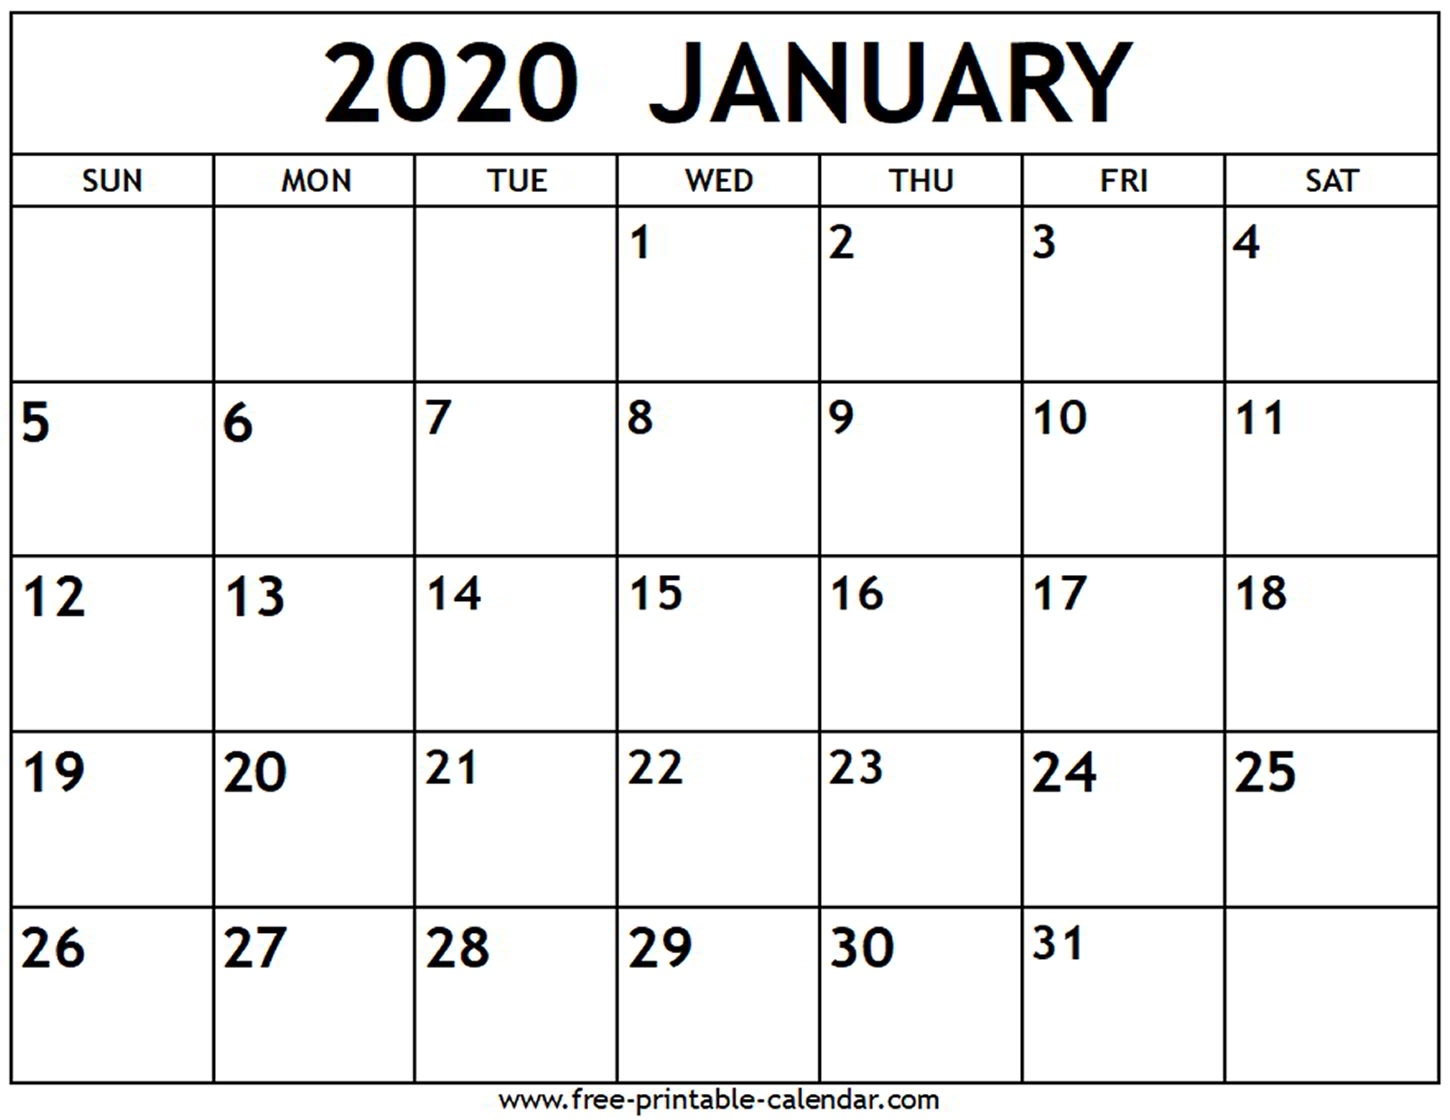 January 2020 Calendar - Free-Printable-Calendar January 2020 Calendar Printable Canada